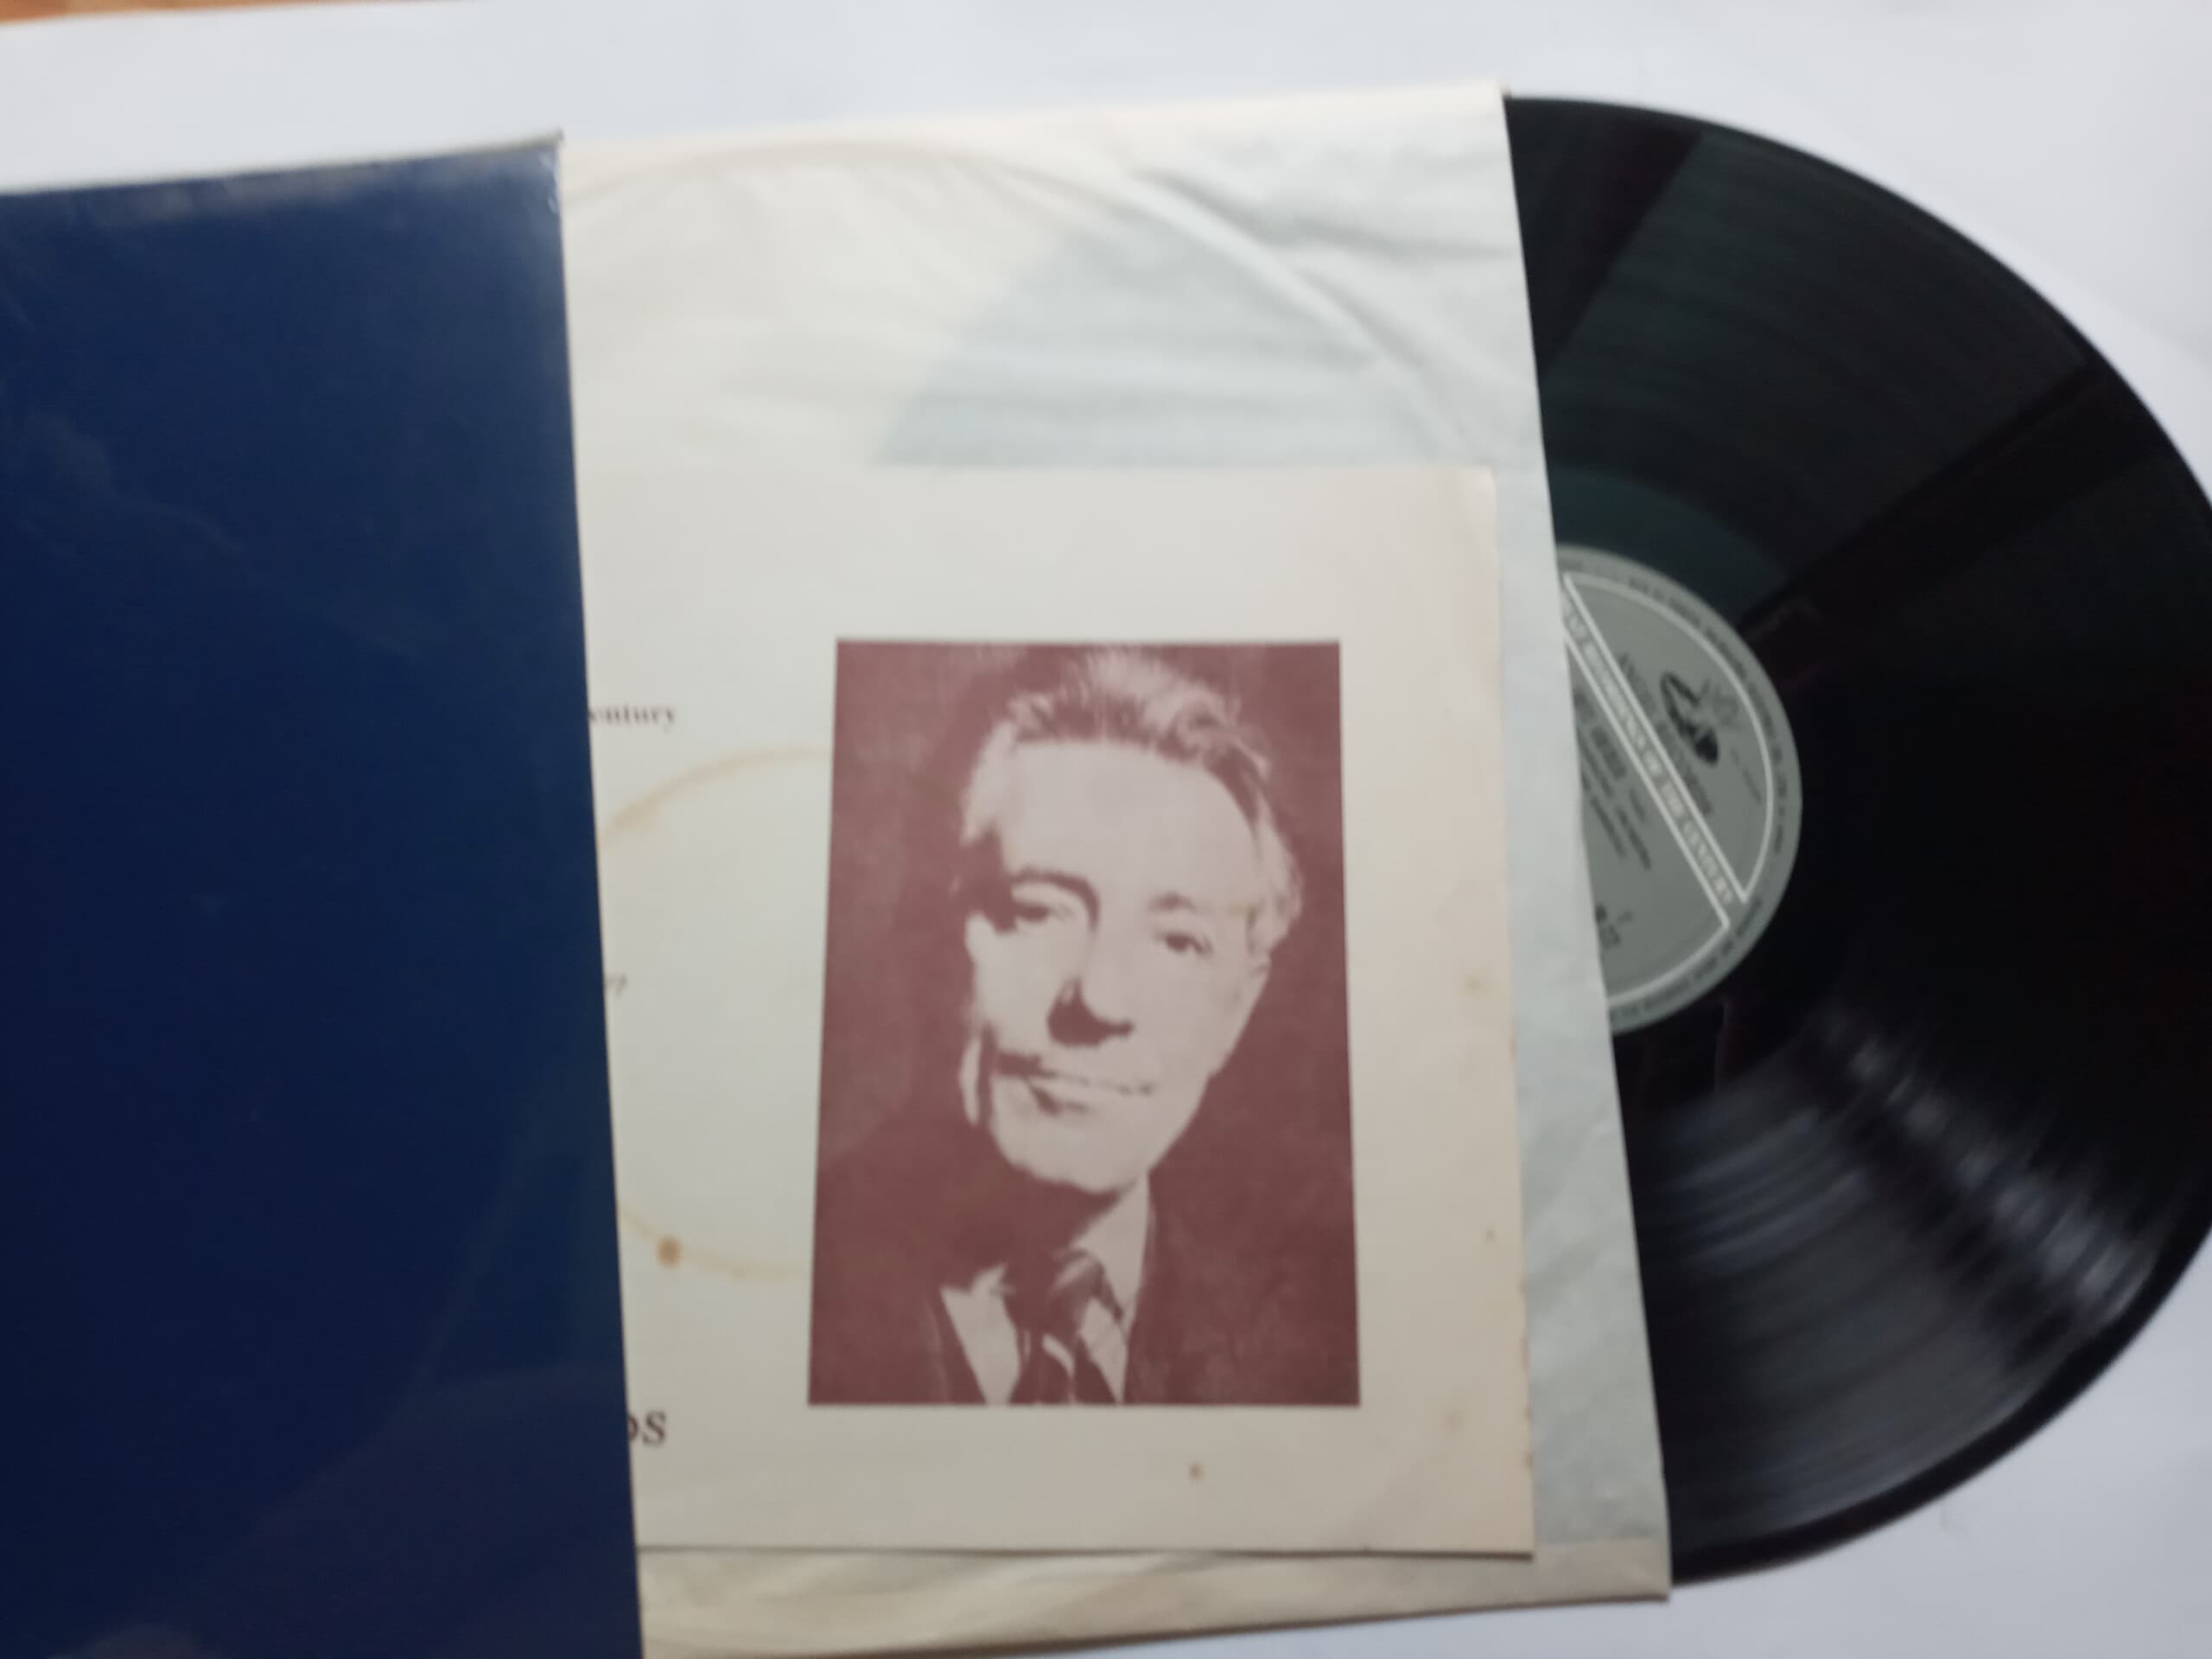 LP(수입) 브람스: 바이올린 협주곡 - 프리츠 크라이슬러/존 바비롤리 